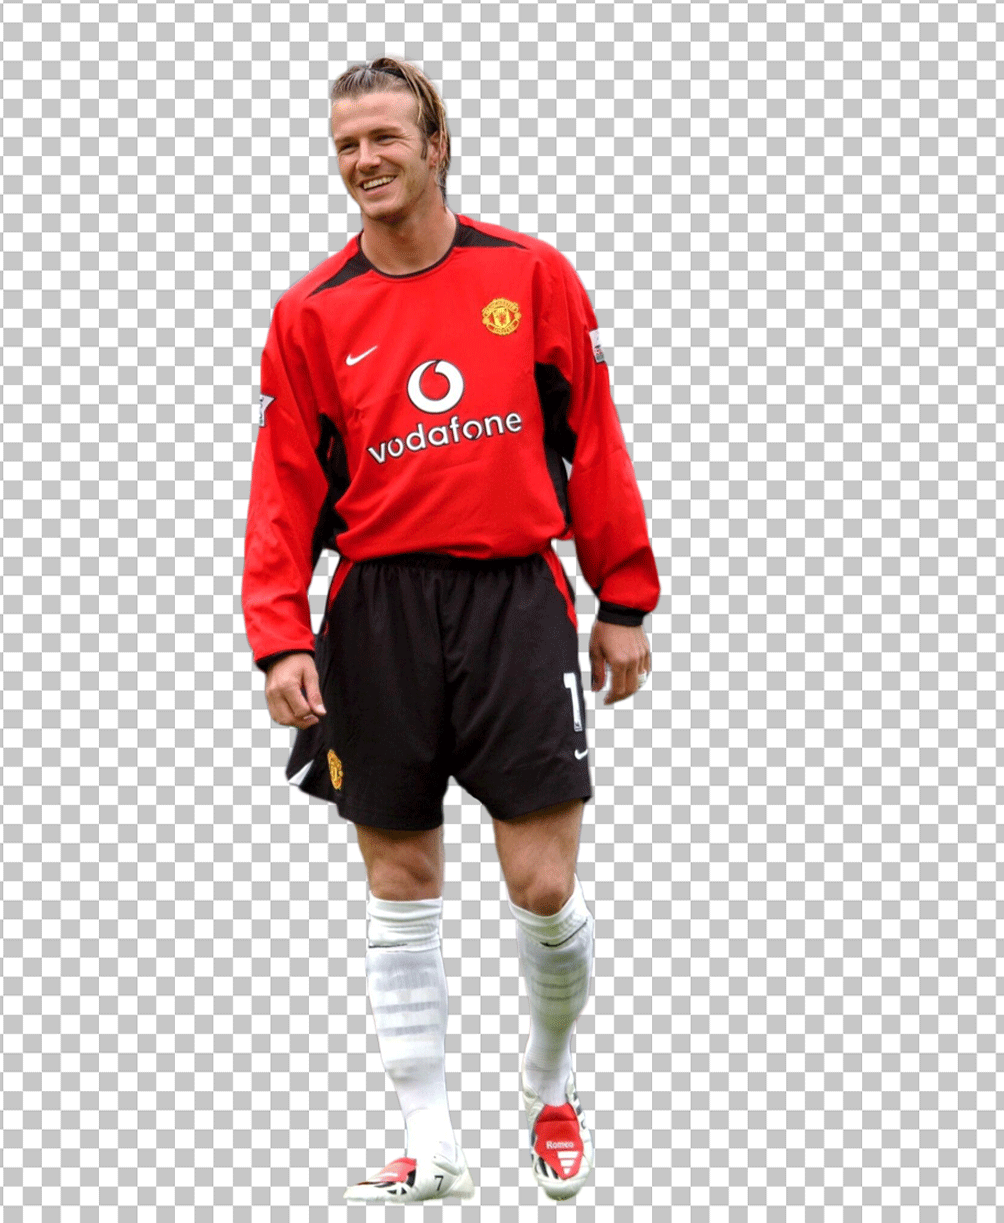 David Beckham walking in Manchester United's jersey.